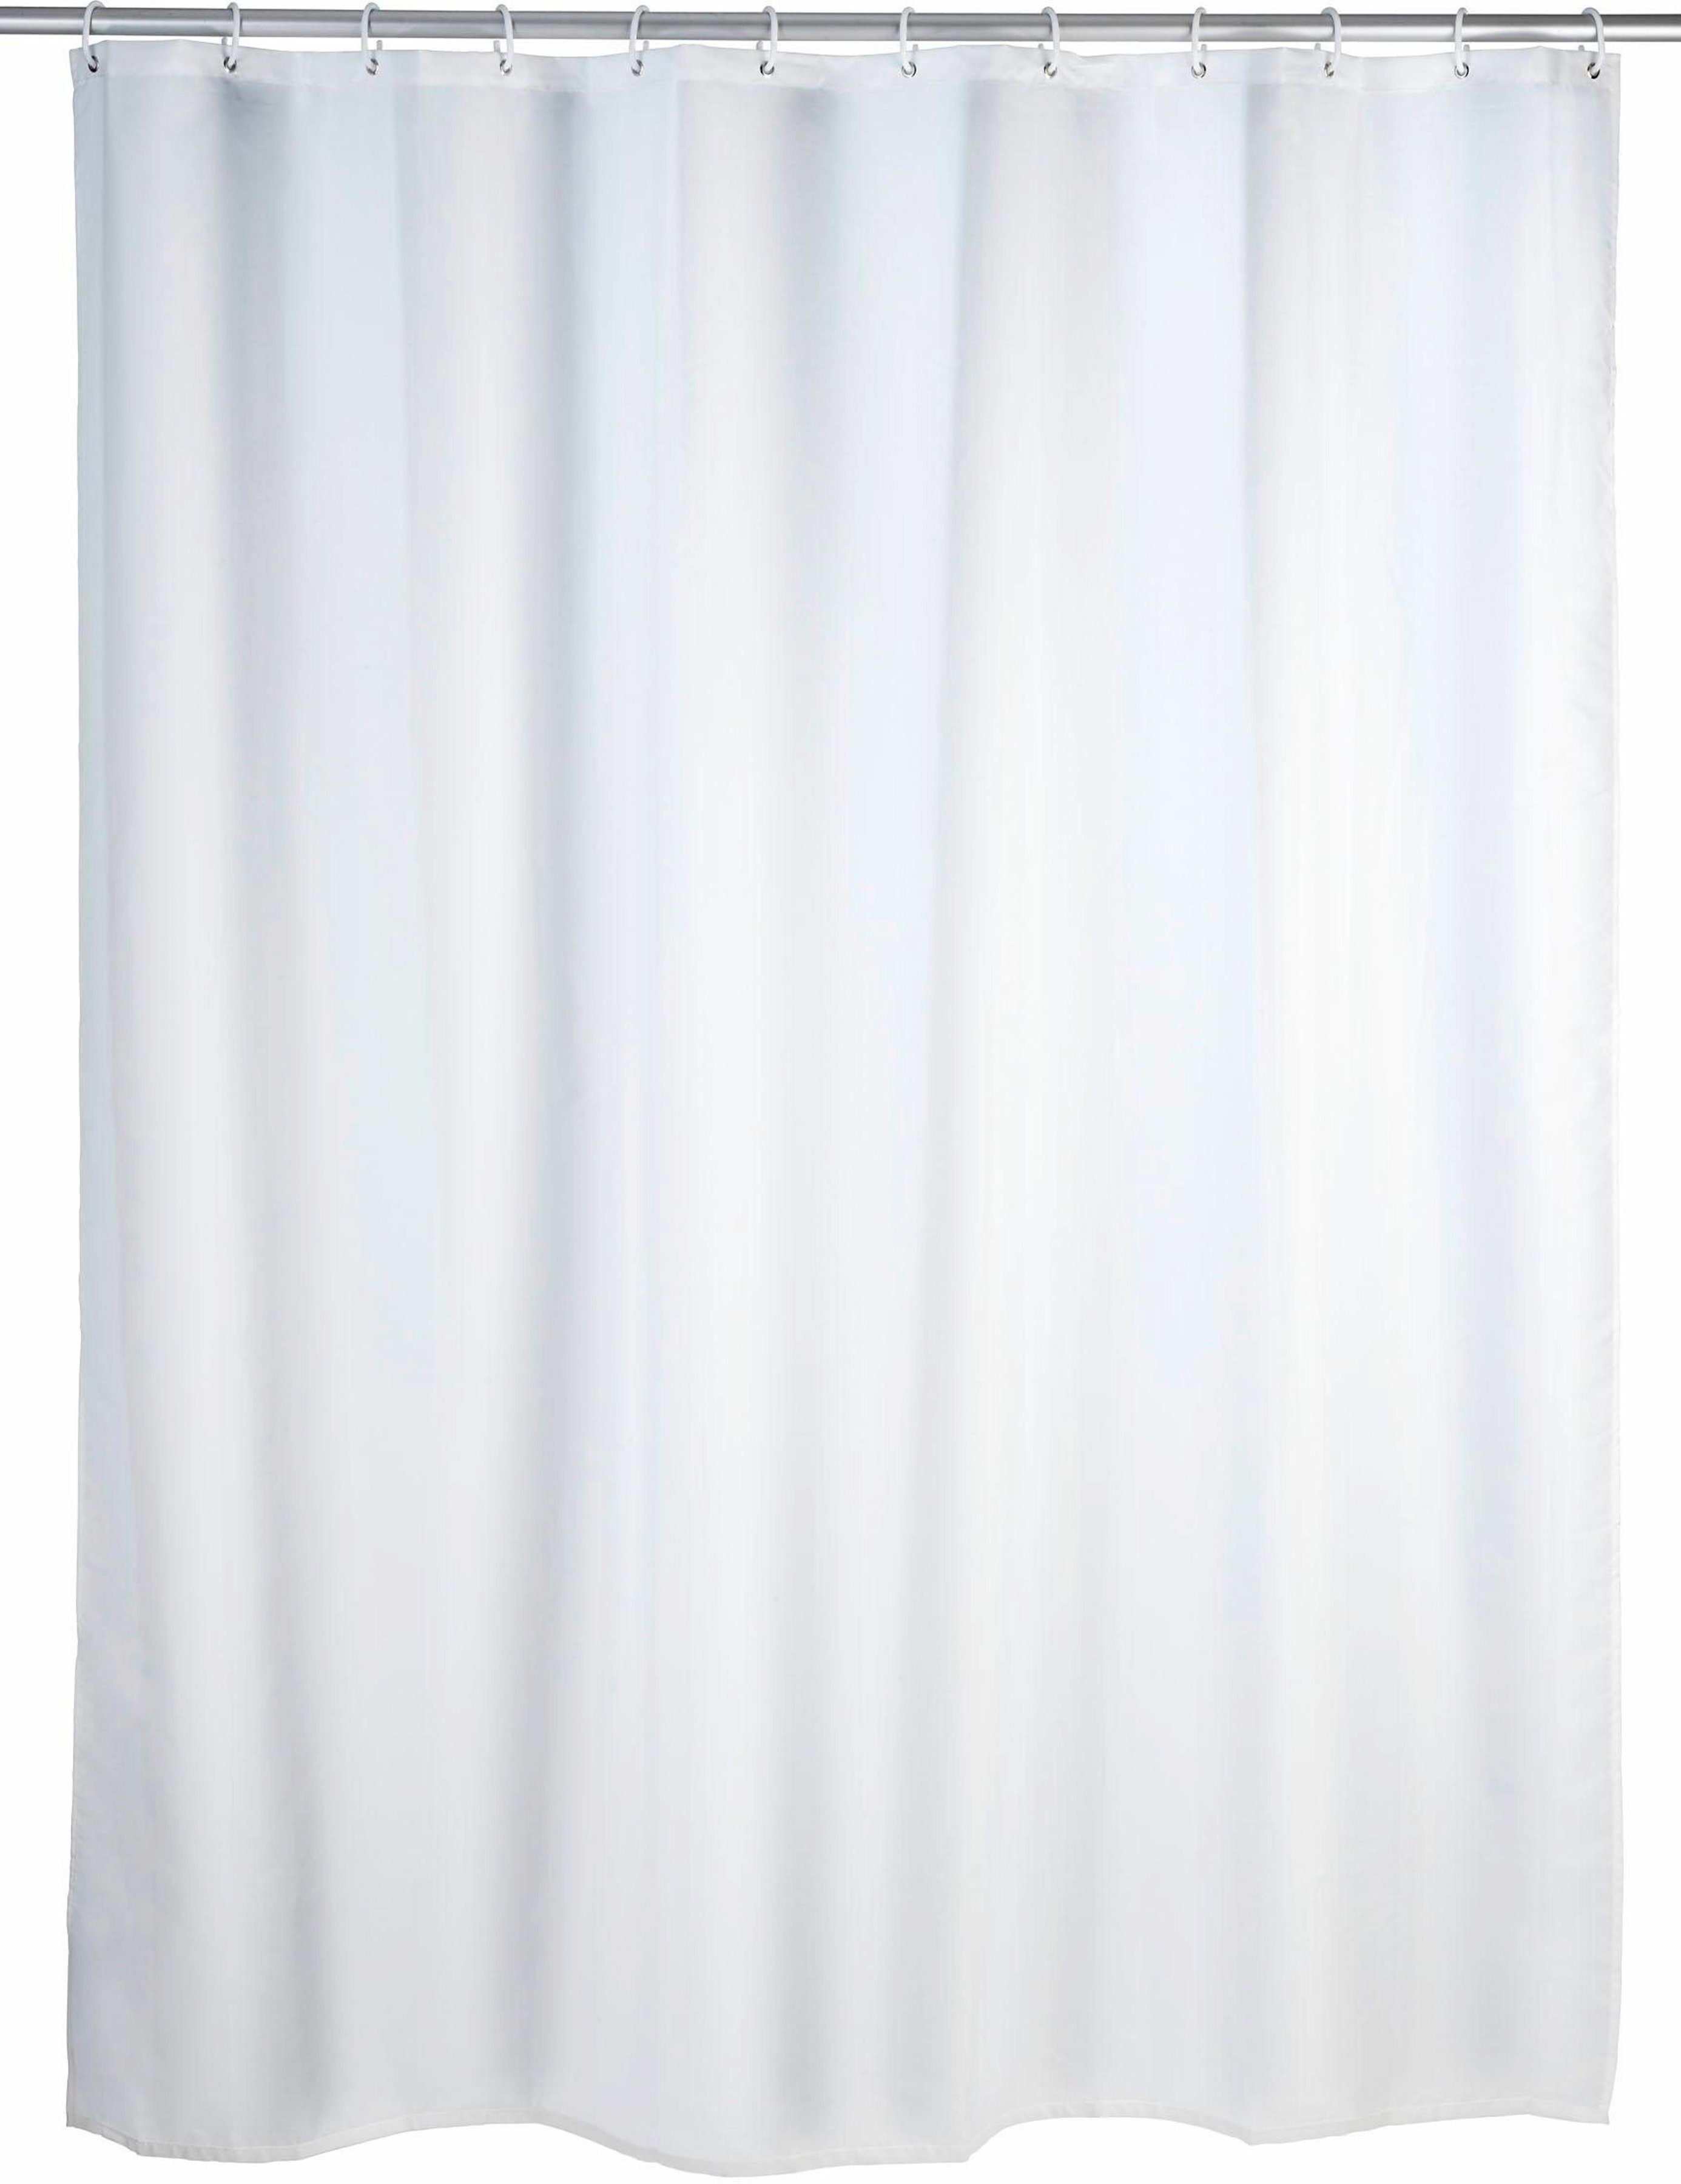 Wenko wit douche gordijn wit 180x200xcm polyester Wit